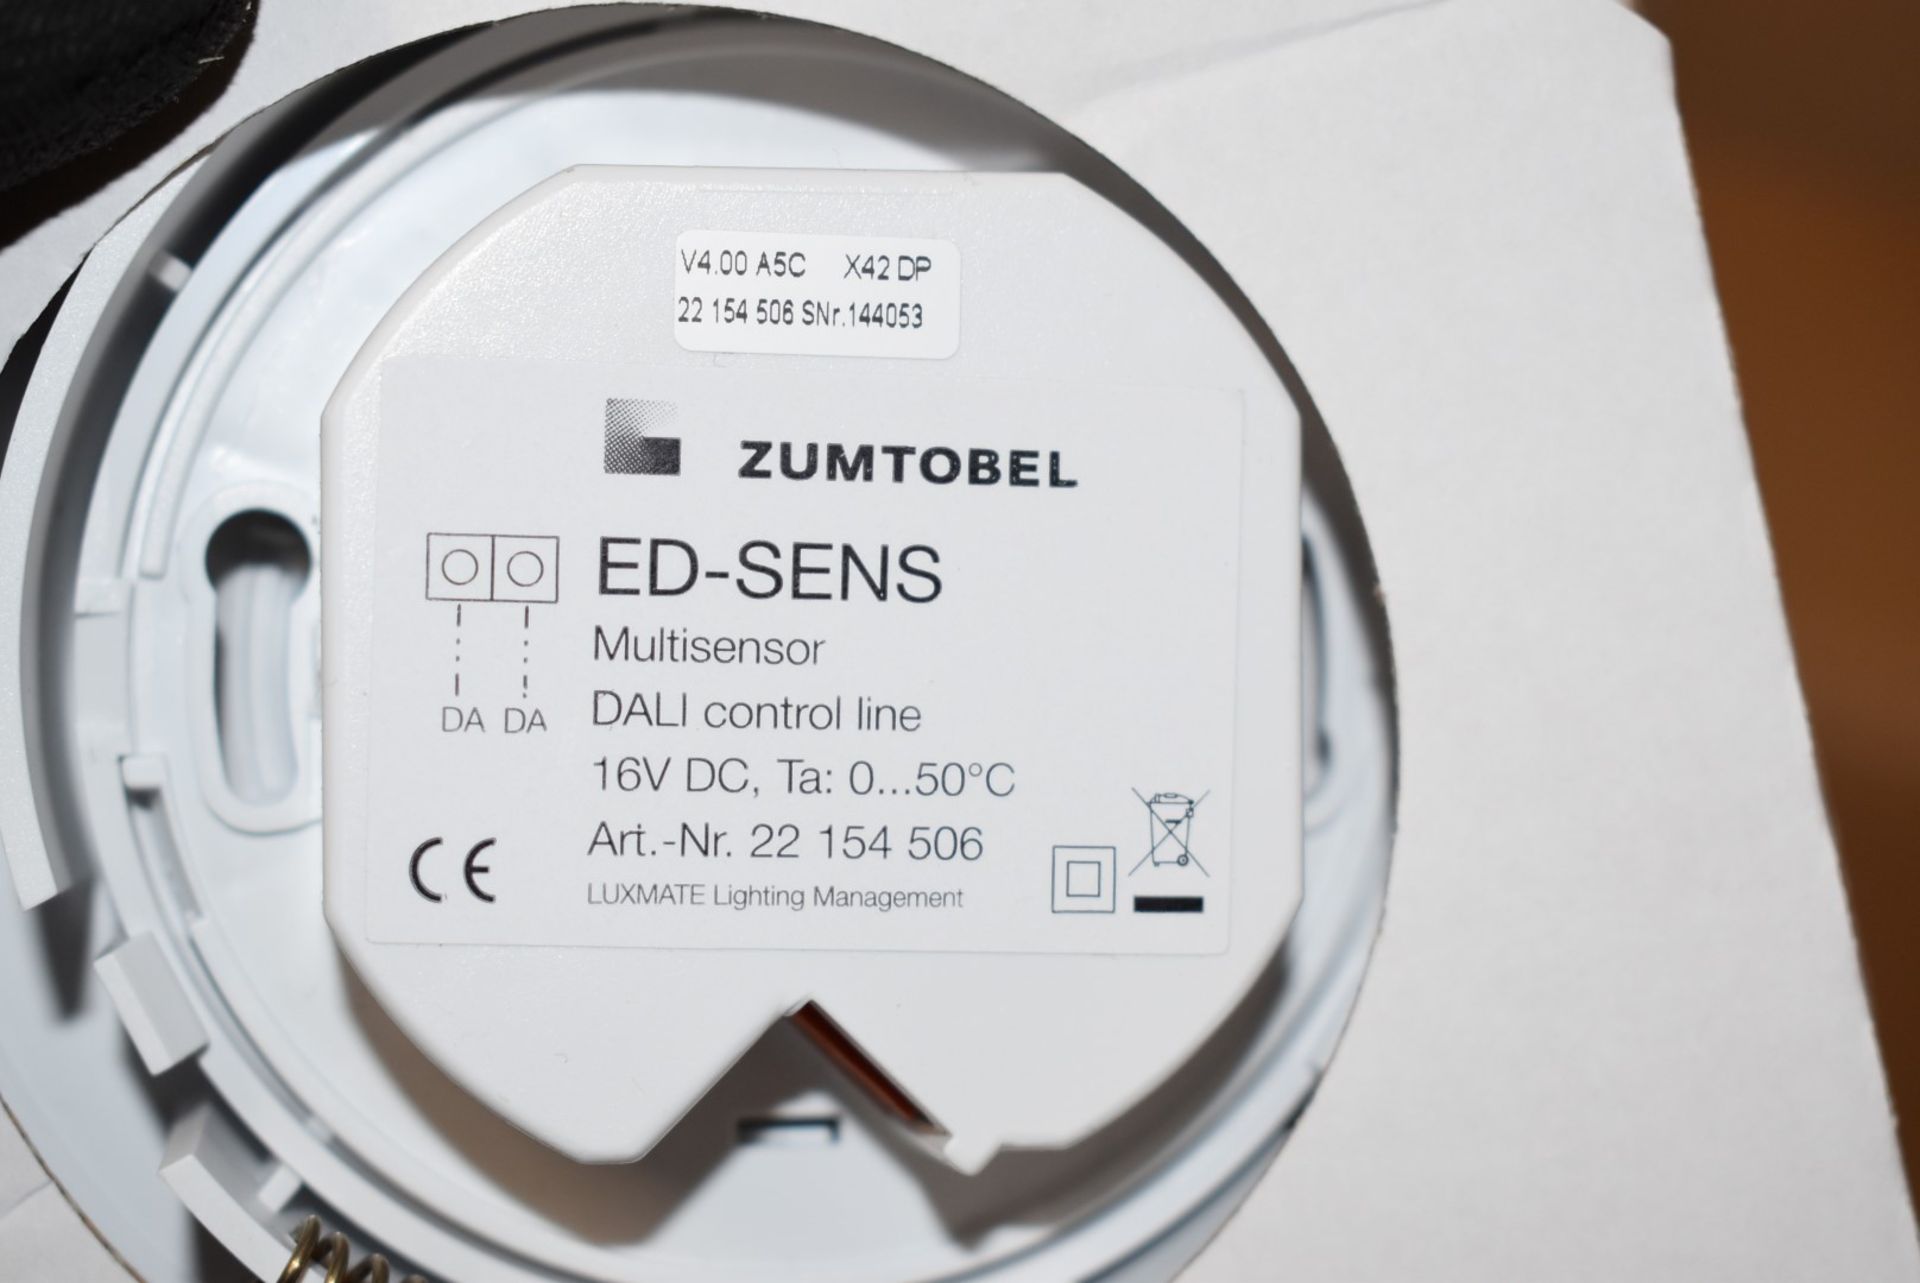 10 x Zumtobel ED-SENS Movement Multisensors - Product Code: 22154506 - New Boxed Stock - RRP £900 - Image 5 of 5